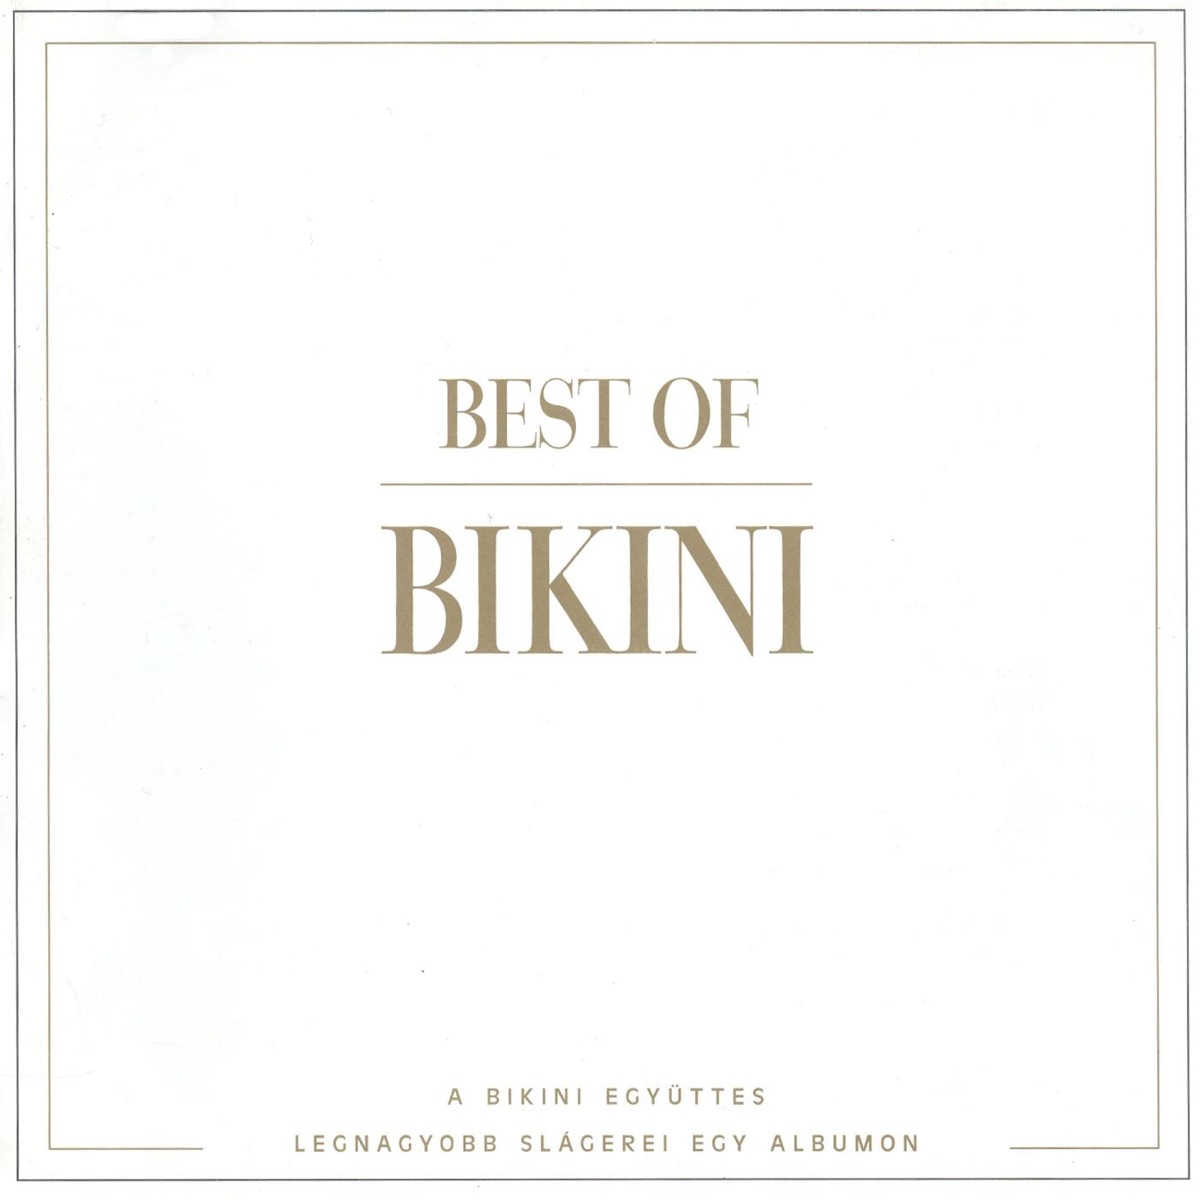 The Very Best of Bikini - Album by Bikini - Apple Music